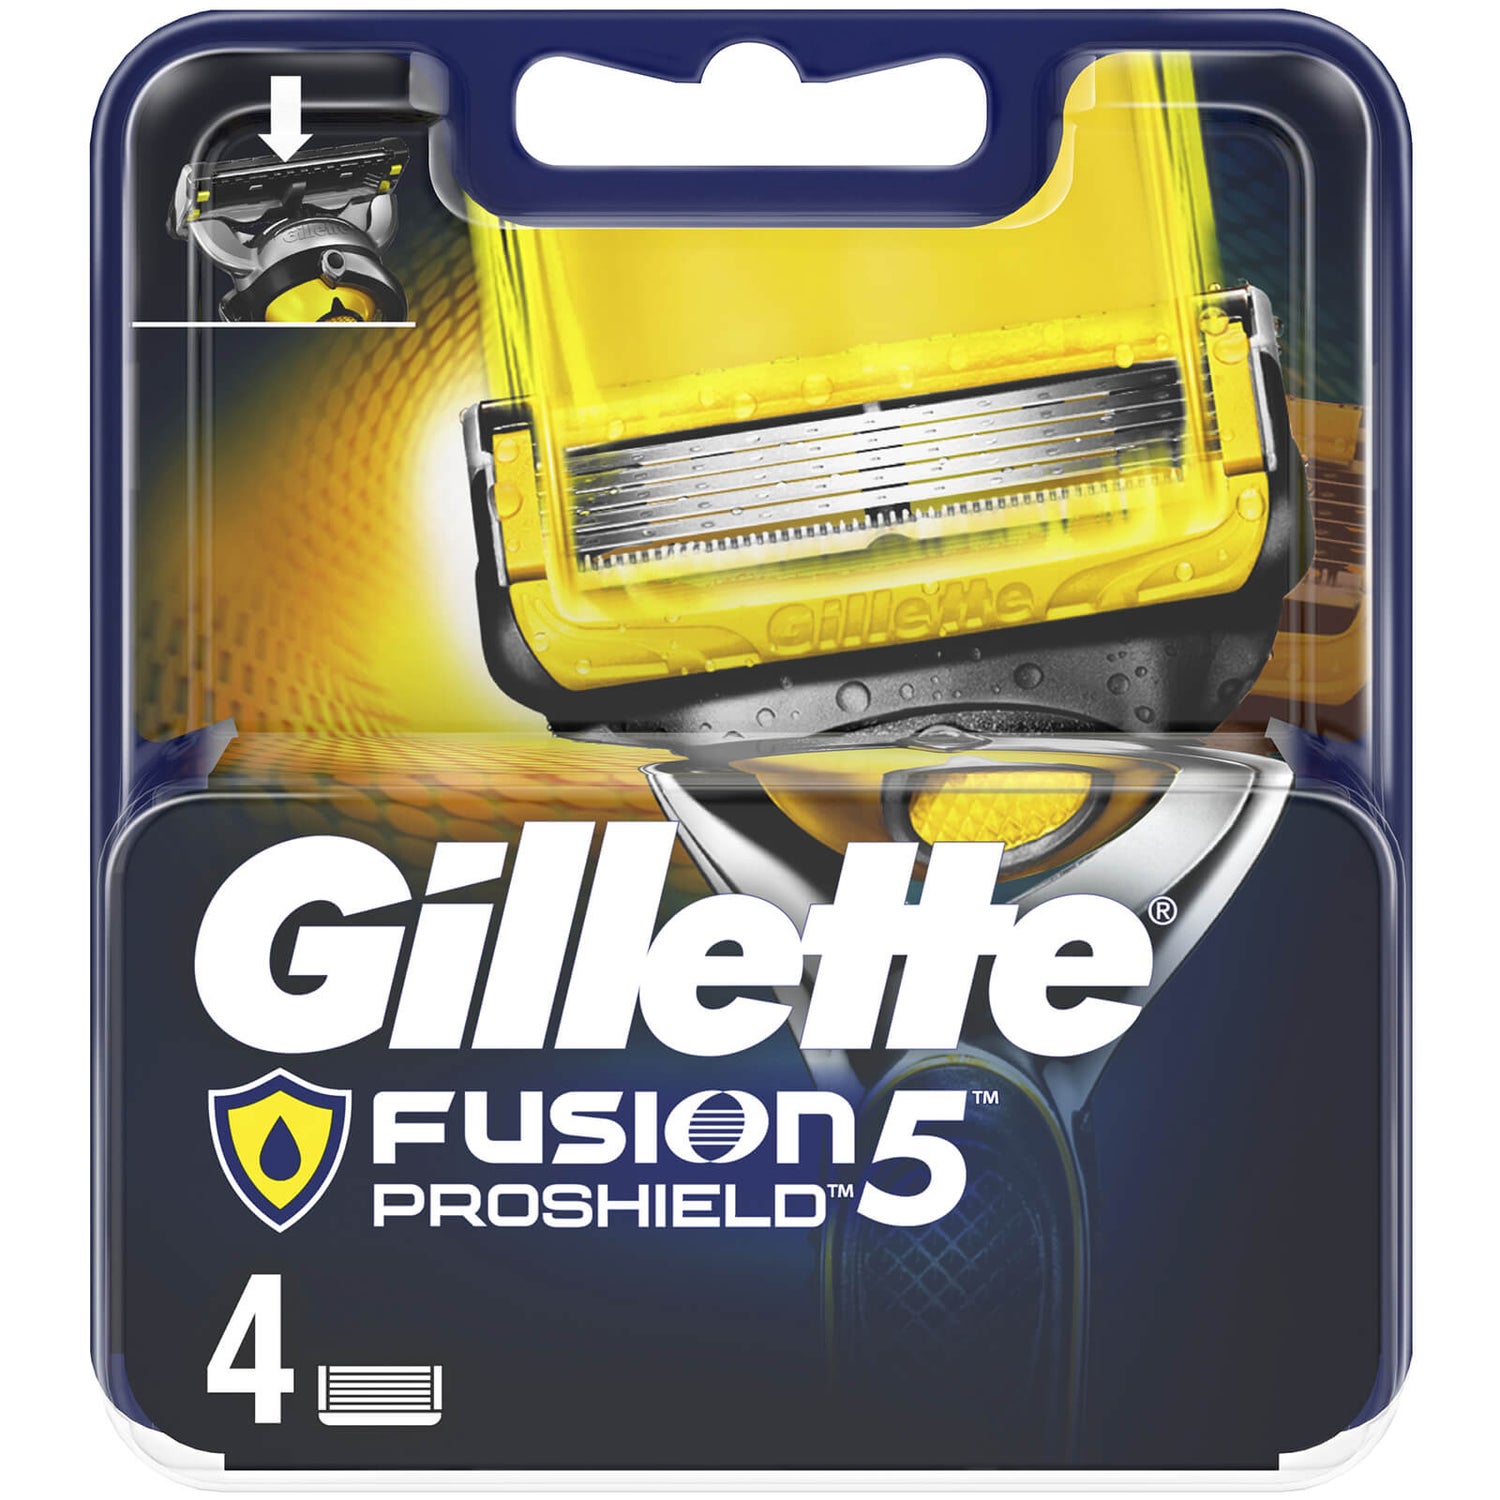 Gillette Fusion5 ProShield Razor Blades (4 Pack)